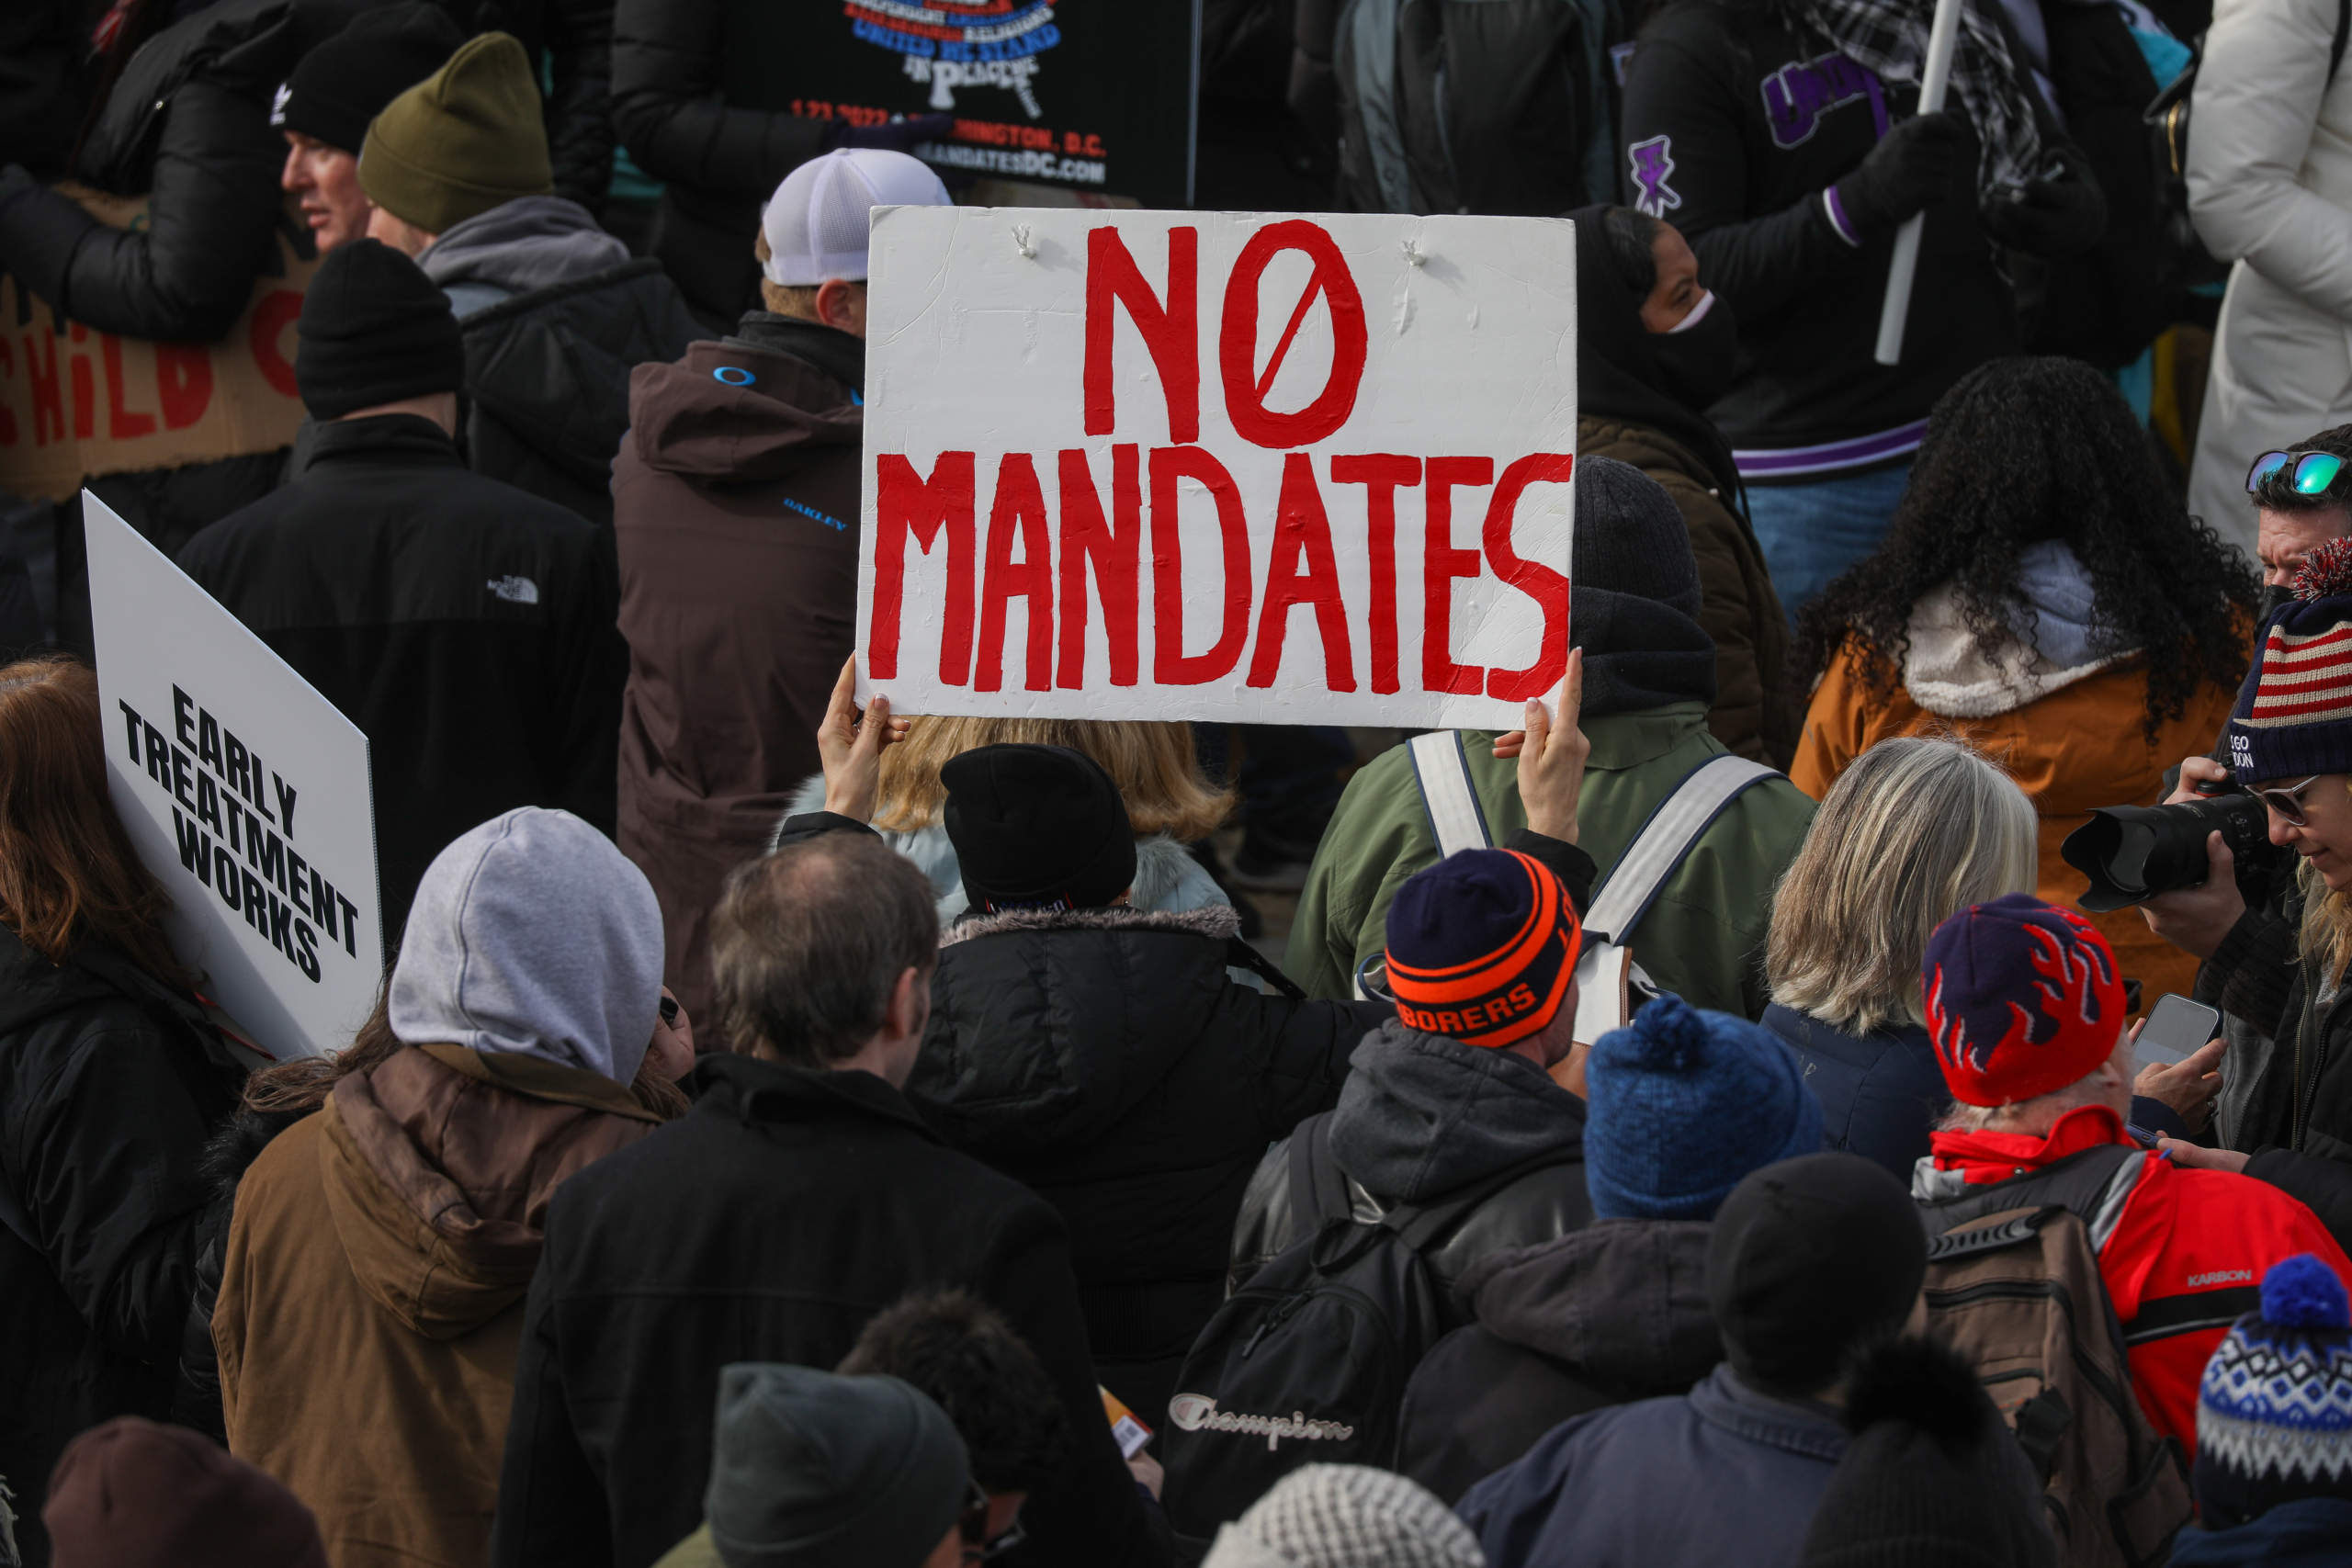 Washington: Thousands gather near Lincoln Memorial against vaccine mandate